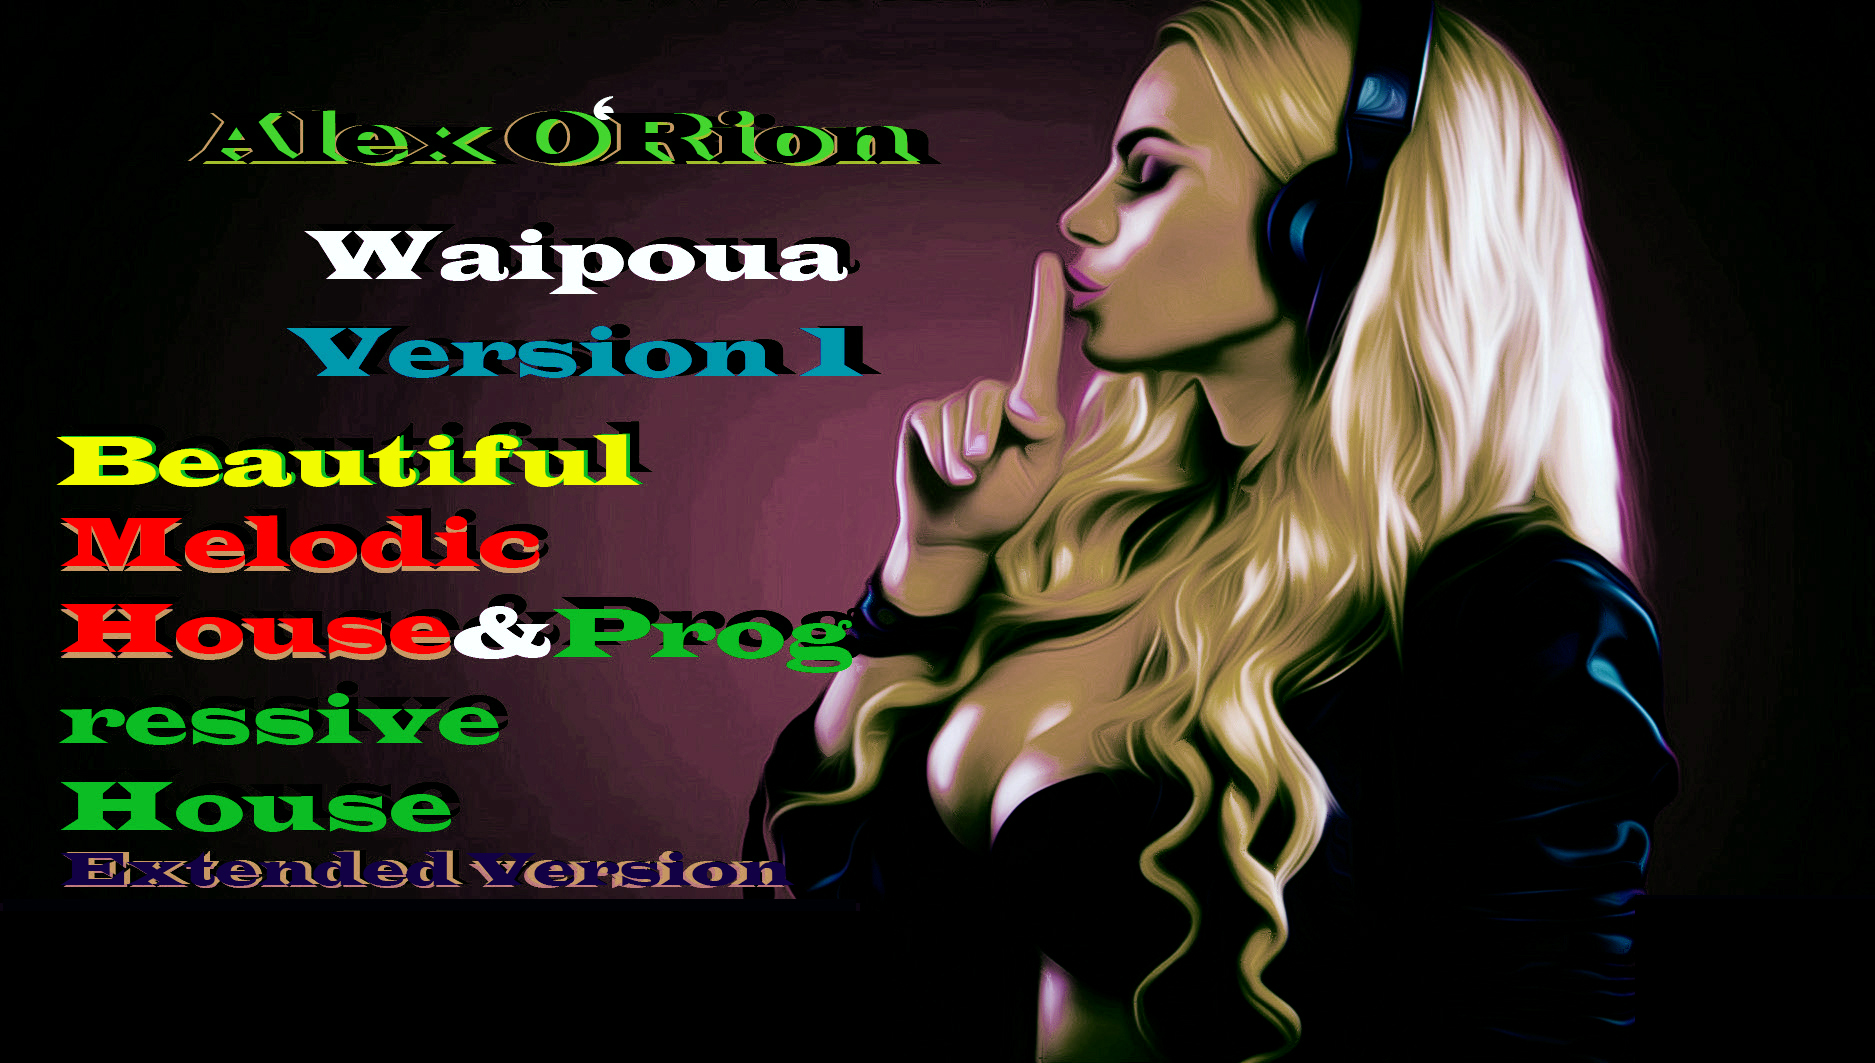 Alex O'Rion - Waipoua (Version 1)Melodic House&Progressive House,Extended Version,Мелодик Хаус,.mp4